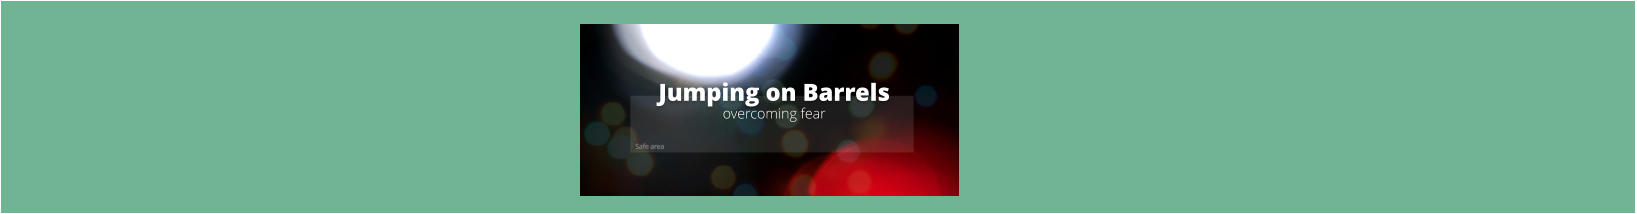 Jumping on Barrels overcoming fear